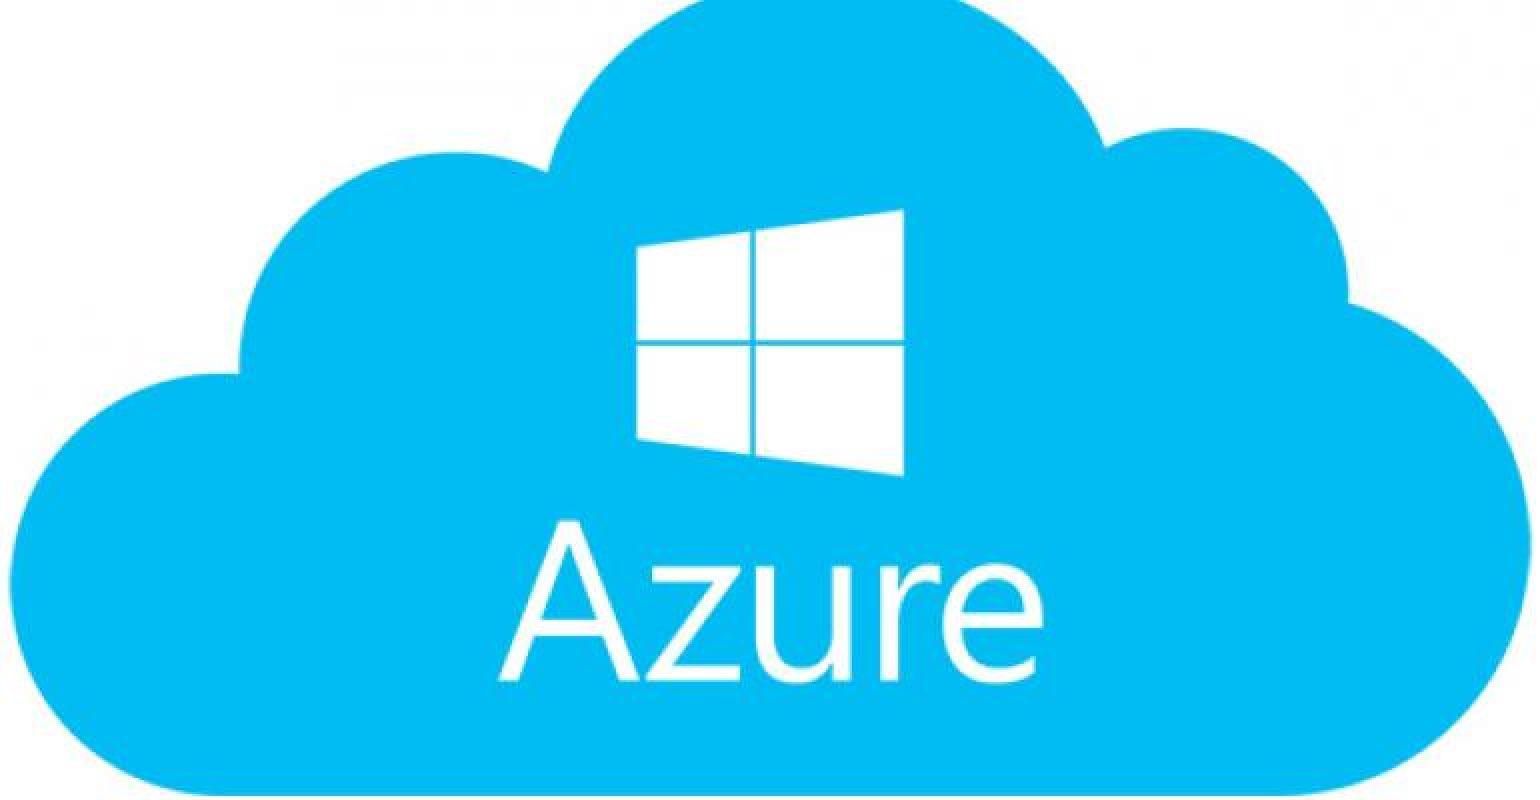 Microsoft Azure training for Beginners in Richmond | Microsoft Azure Fundamentals | Azure cloud computing training | Microsoft Azure Fundamentals AZ-900 Certification Exam Prep (Preparation) Training Course